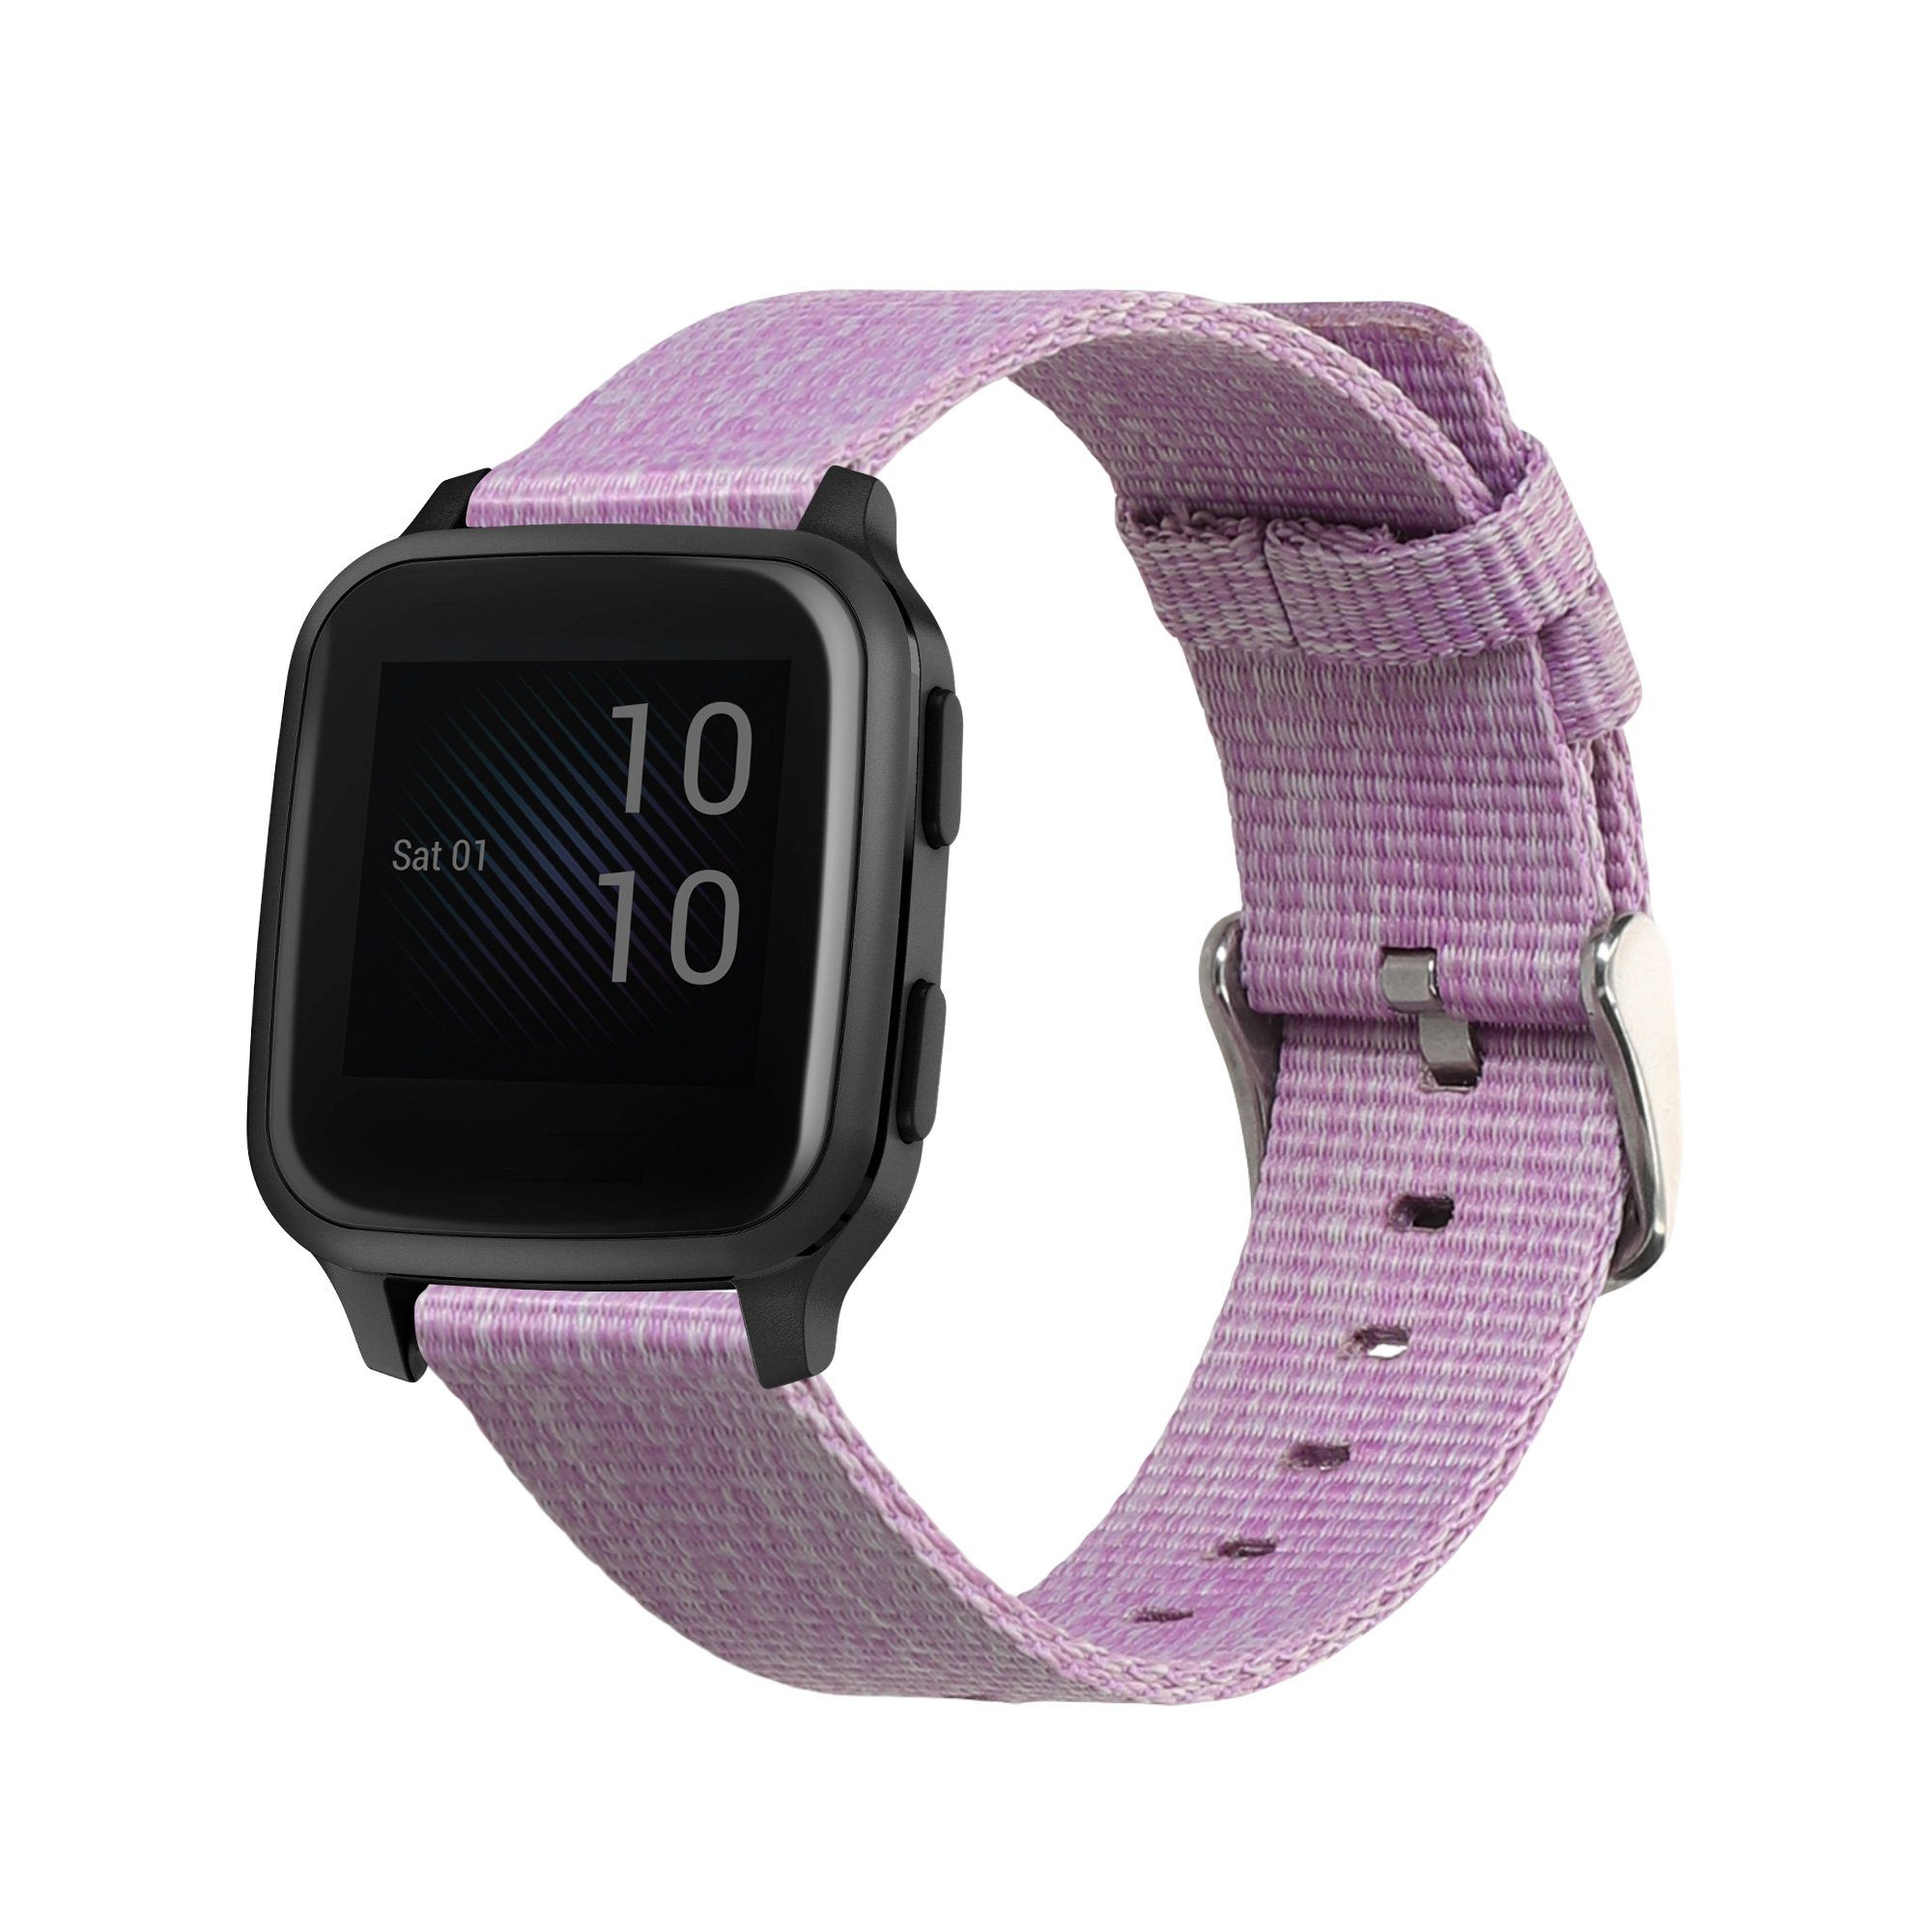 Sq in Lavendel Uhrenarmband Venu 2 / Band - für Ersatz Tracker für Armband Music Fitness kwmobile 2 20mm, Sq Armband Garmin